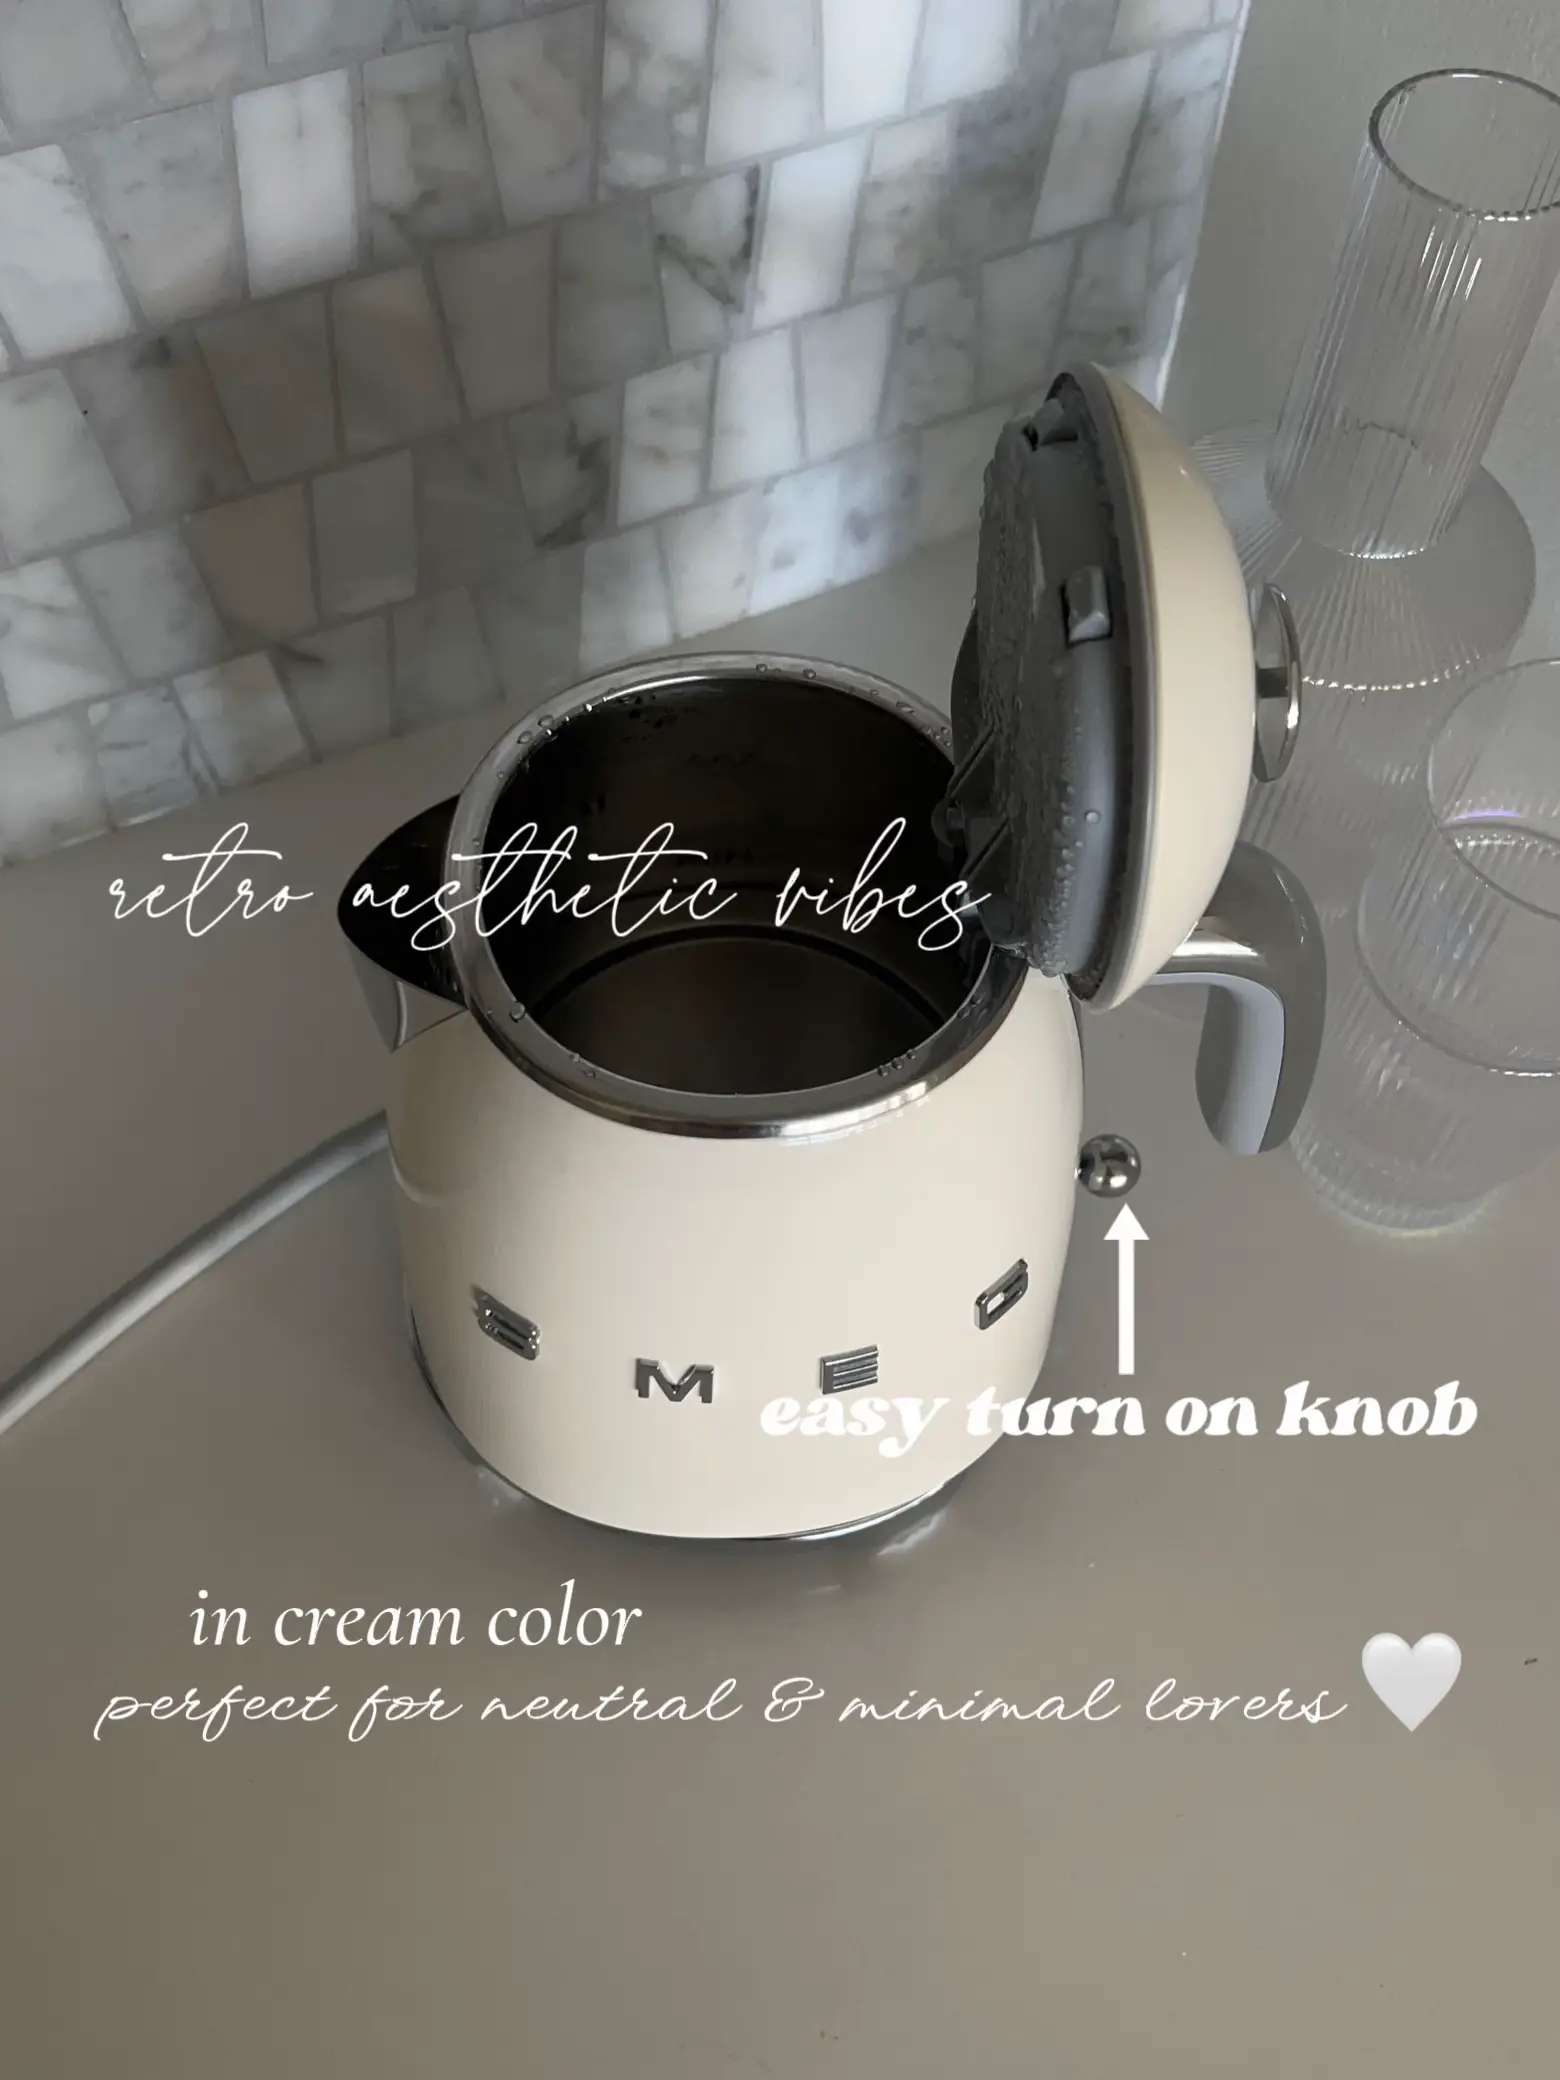 Smeg 3.3-Cup Electric Mini-Kettle